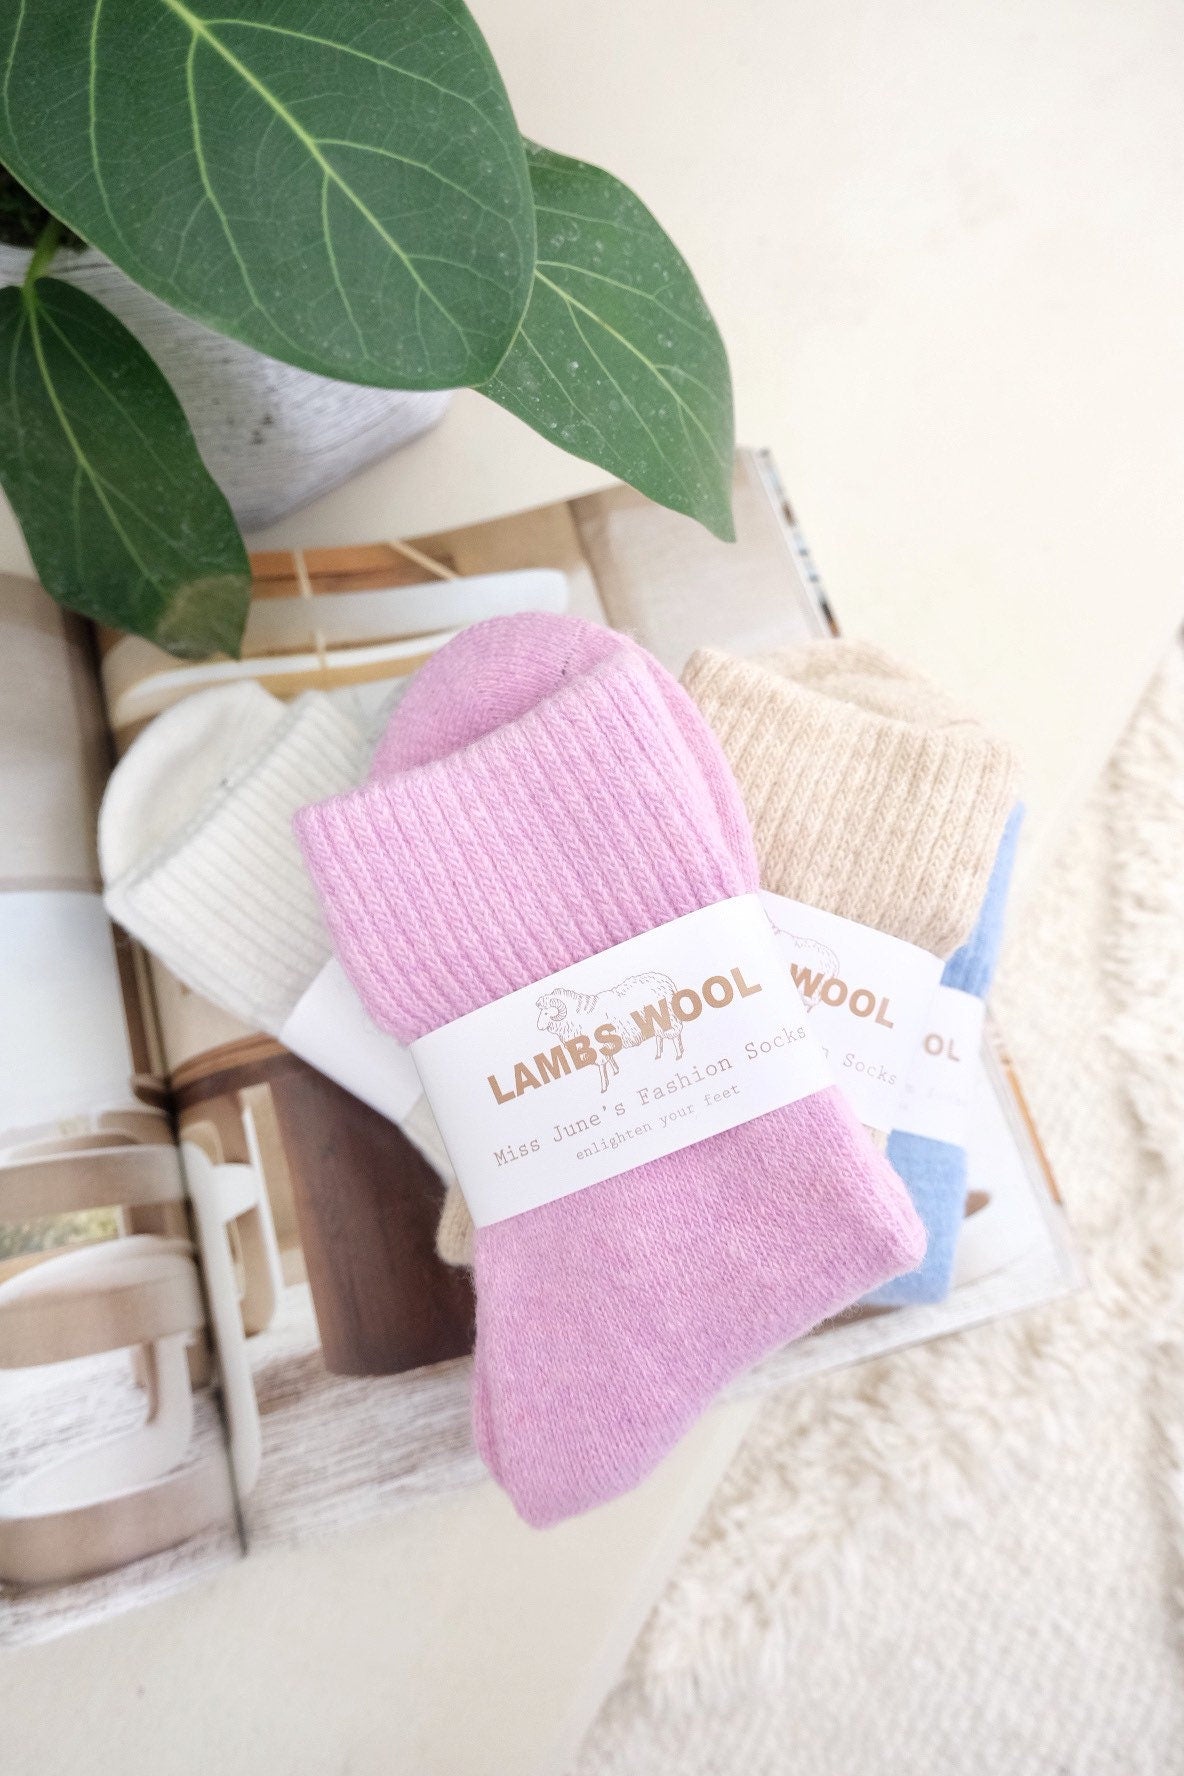 Miss June’s| 1 Pair Wool blended socks|winter| Warm | Soft | High quality| Gift idea | Thanksgiving |women’s socks| Cozy